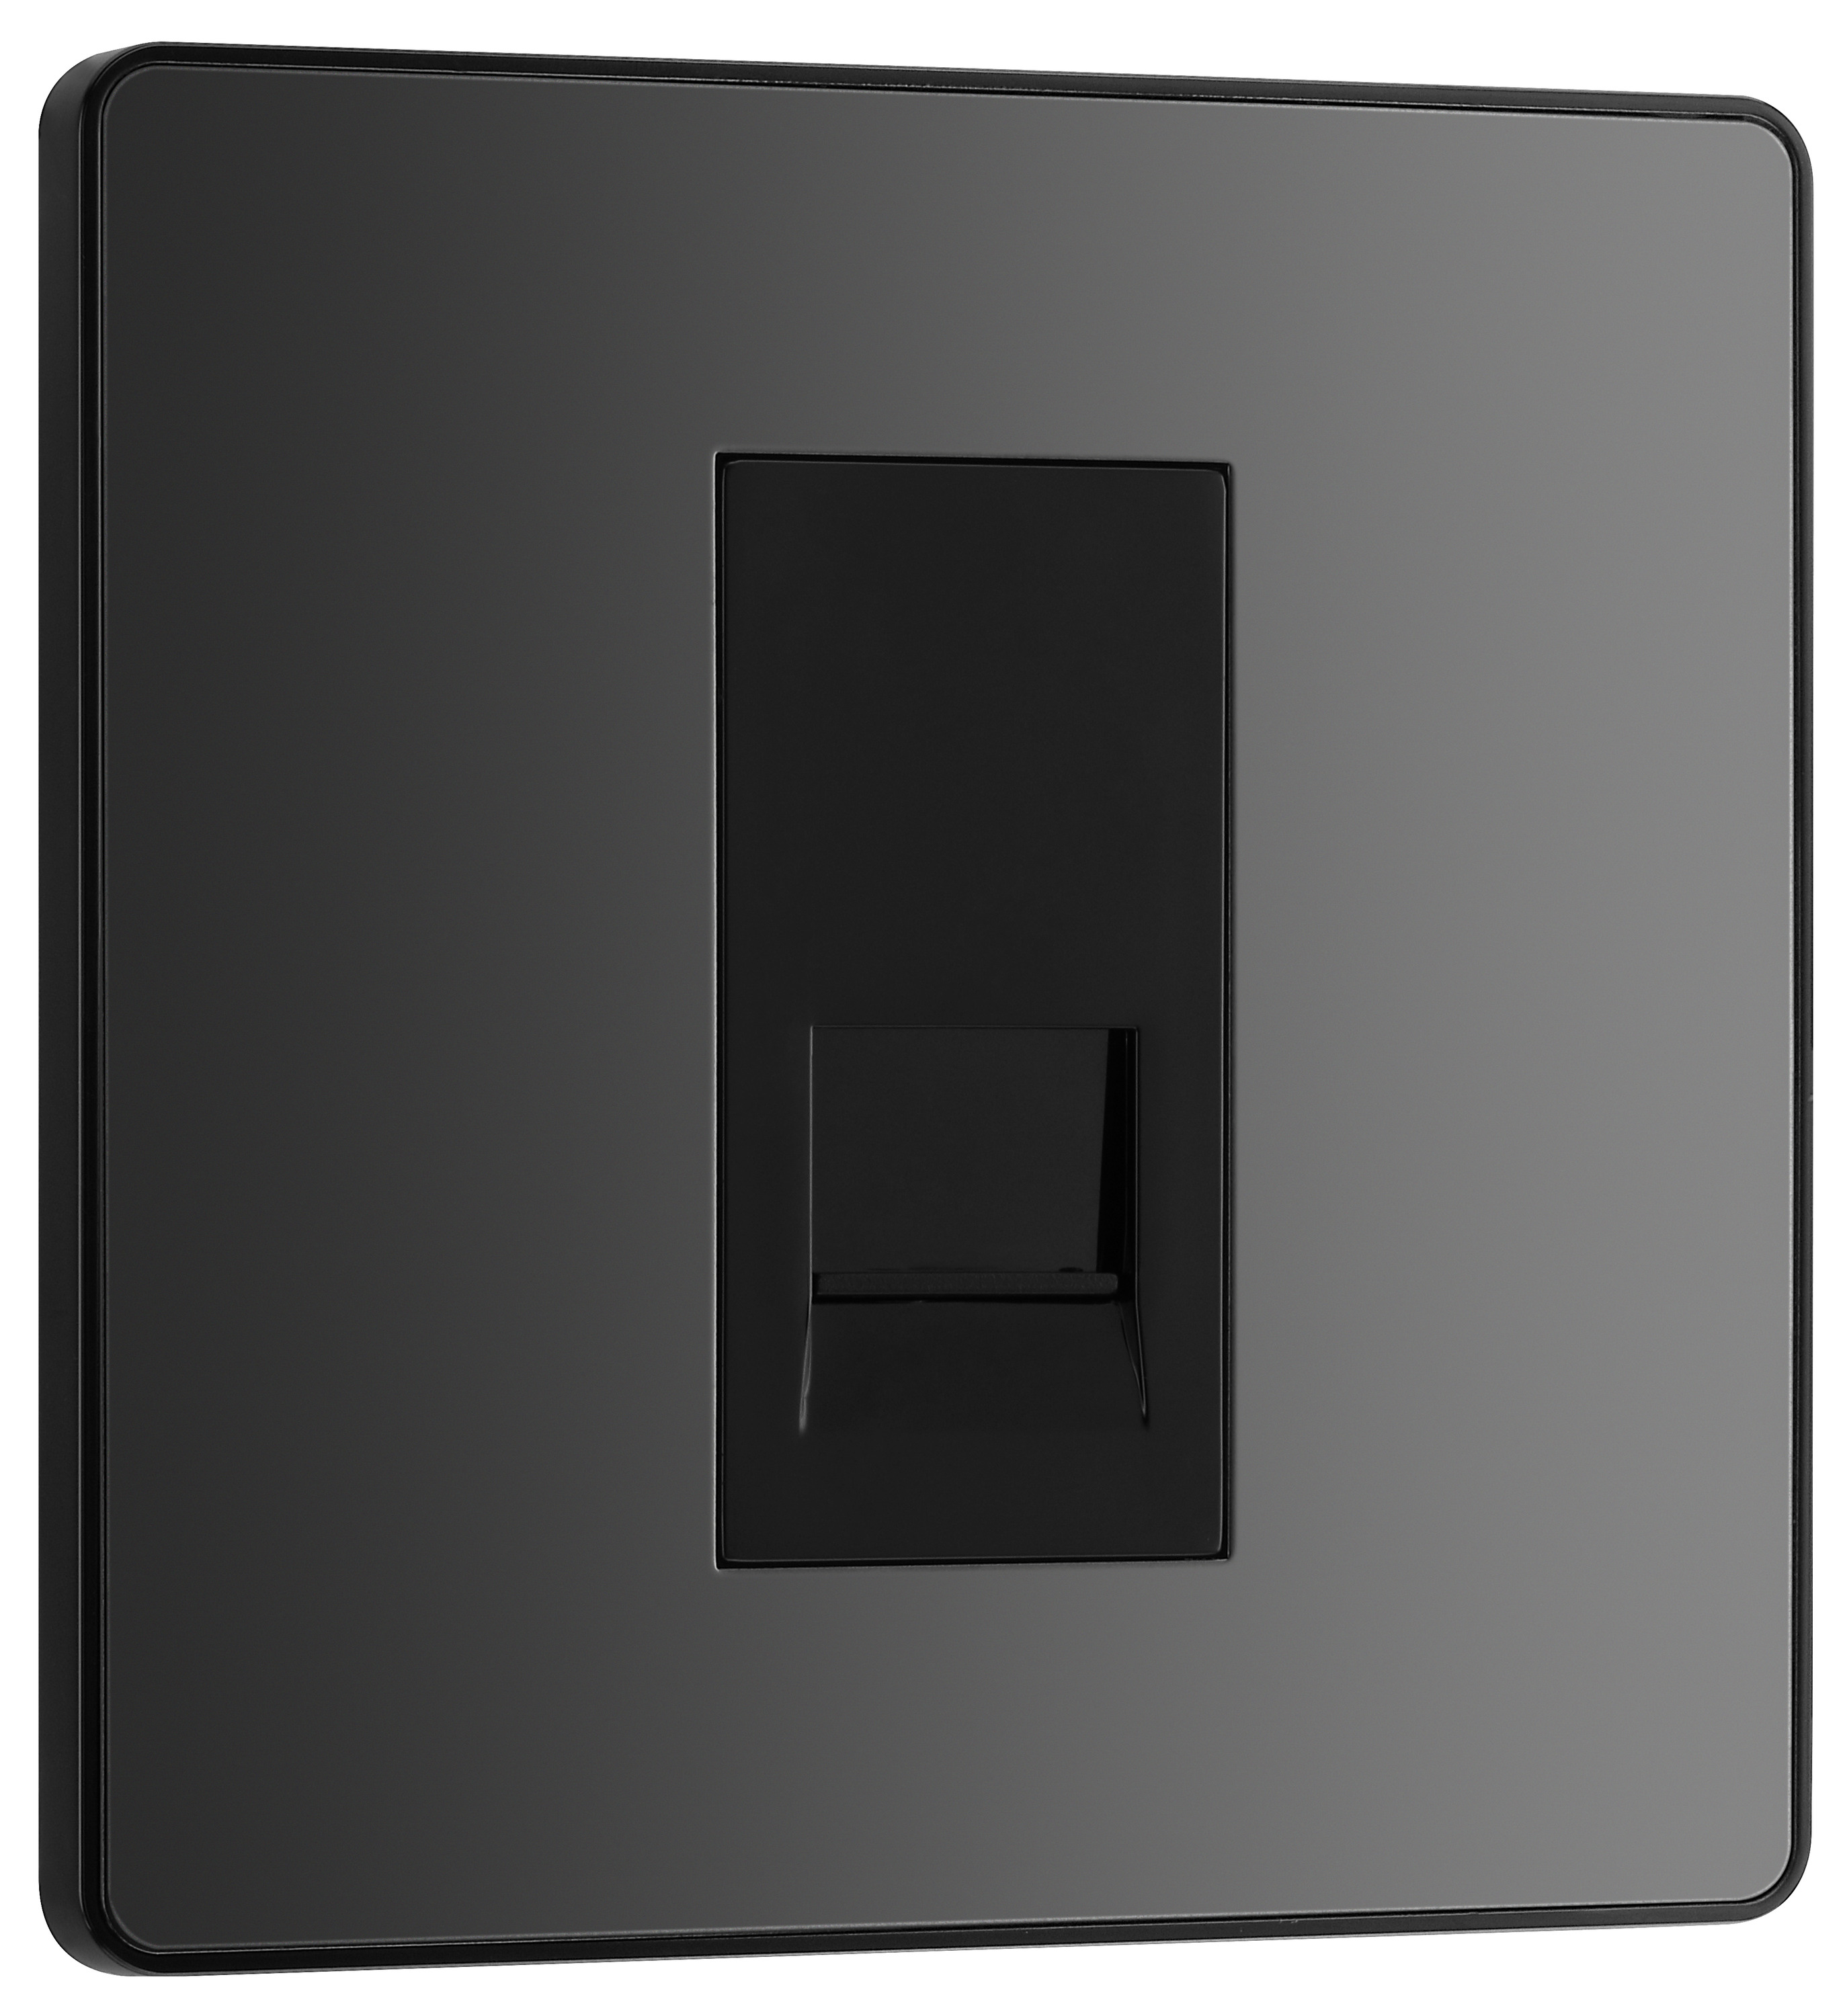 Image of BG Evolve Secondary Black Chrome Single Telephone Socket